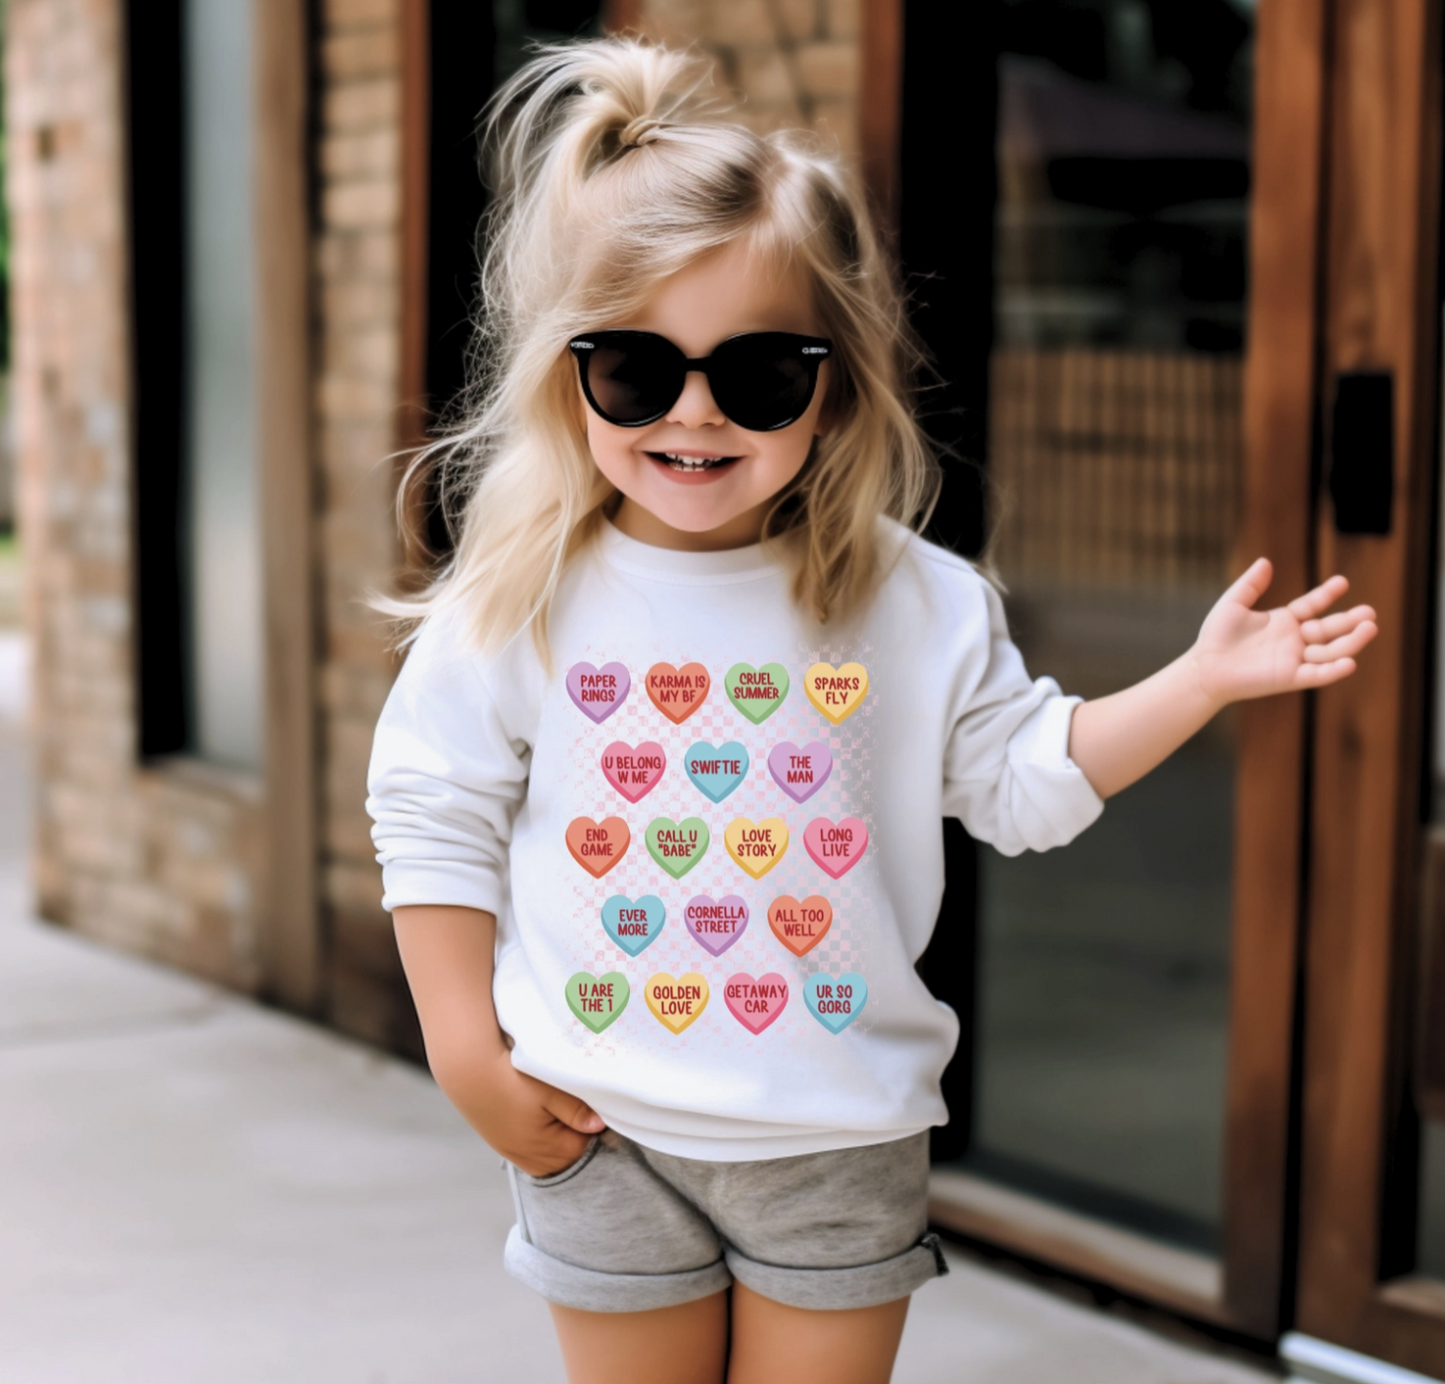 Swiftie Candy Hearts Sweatshirt